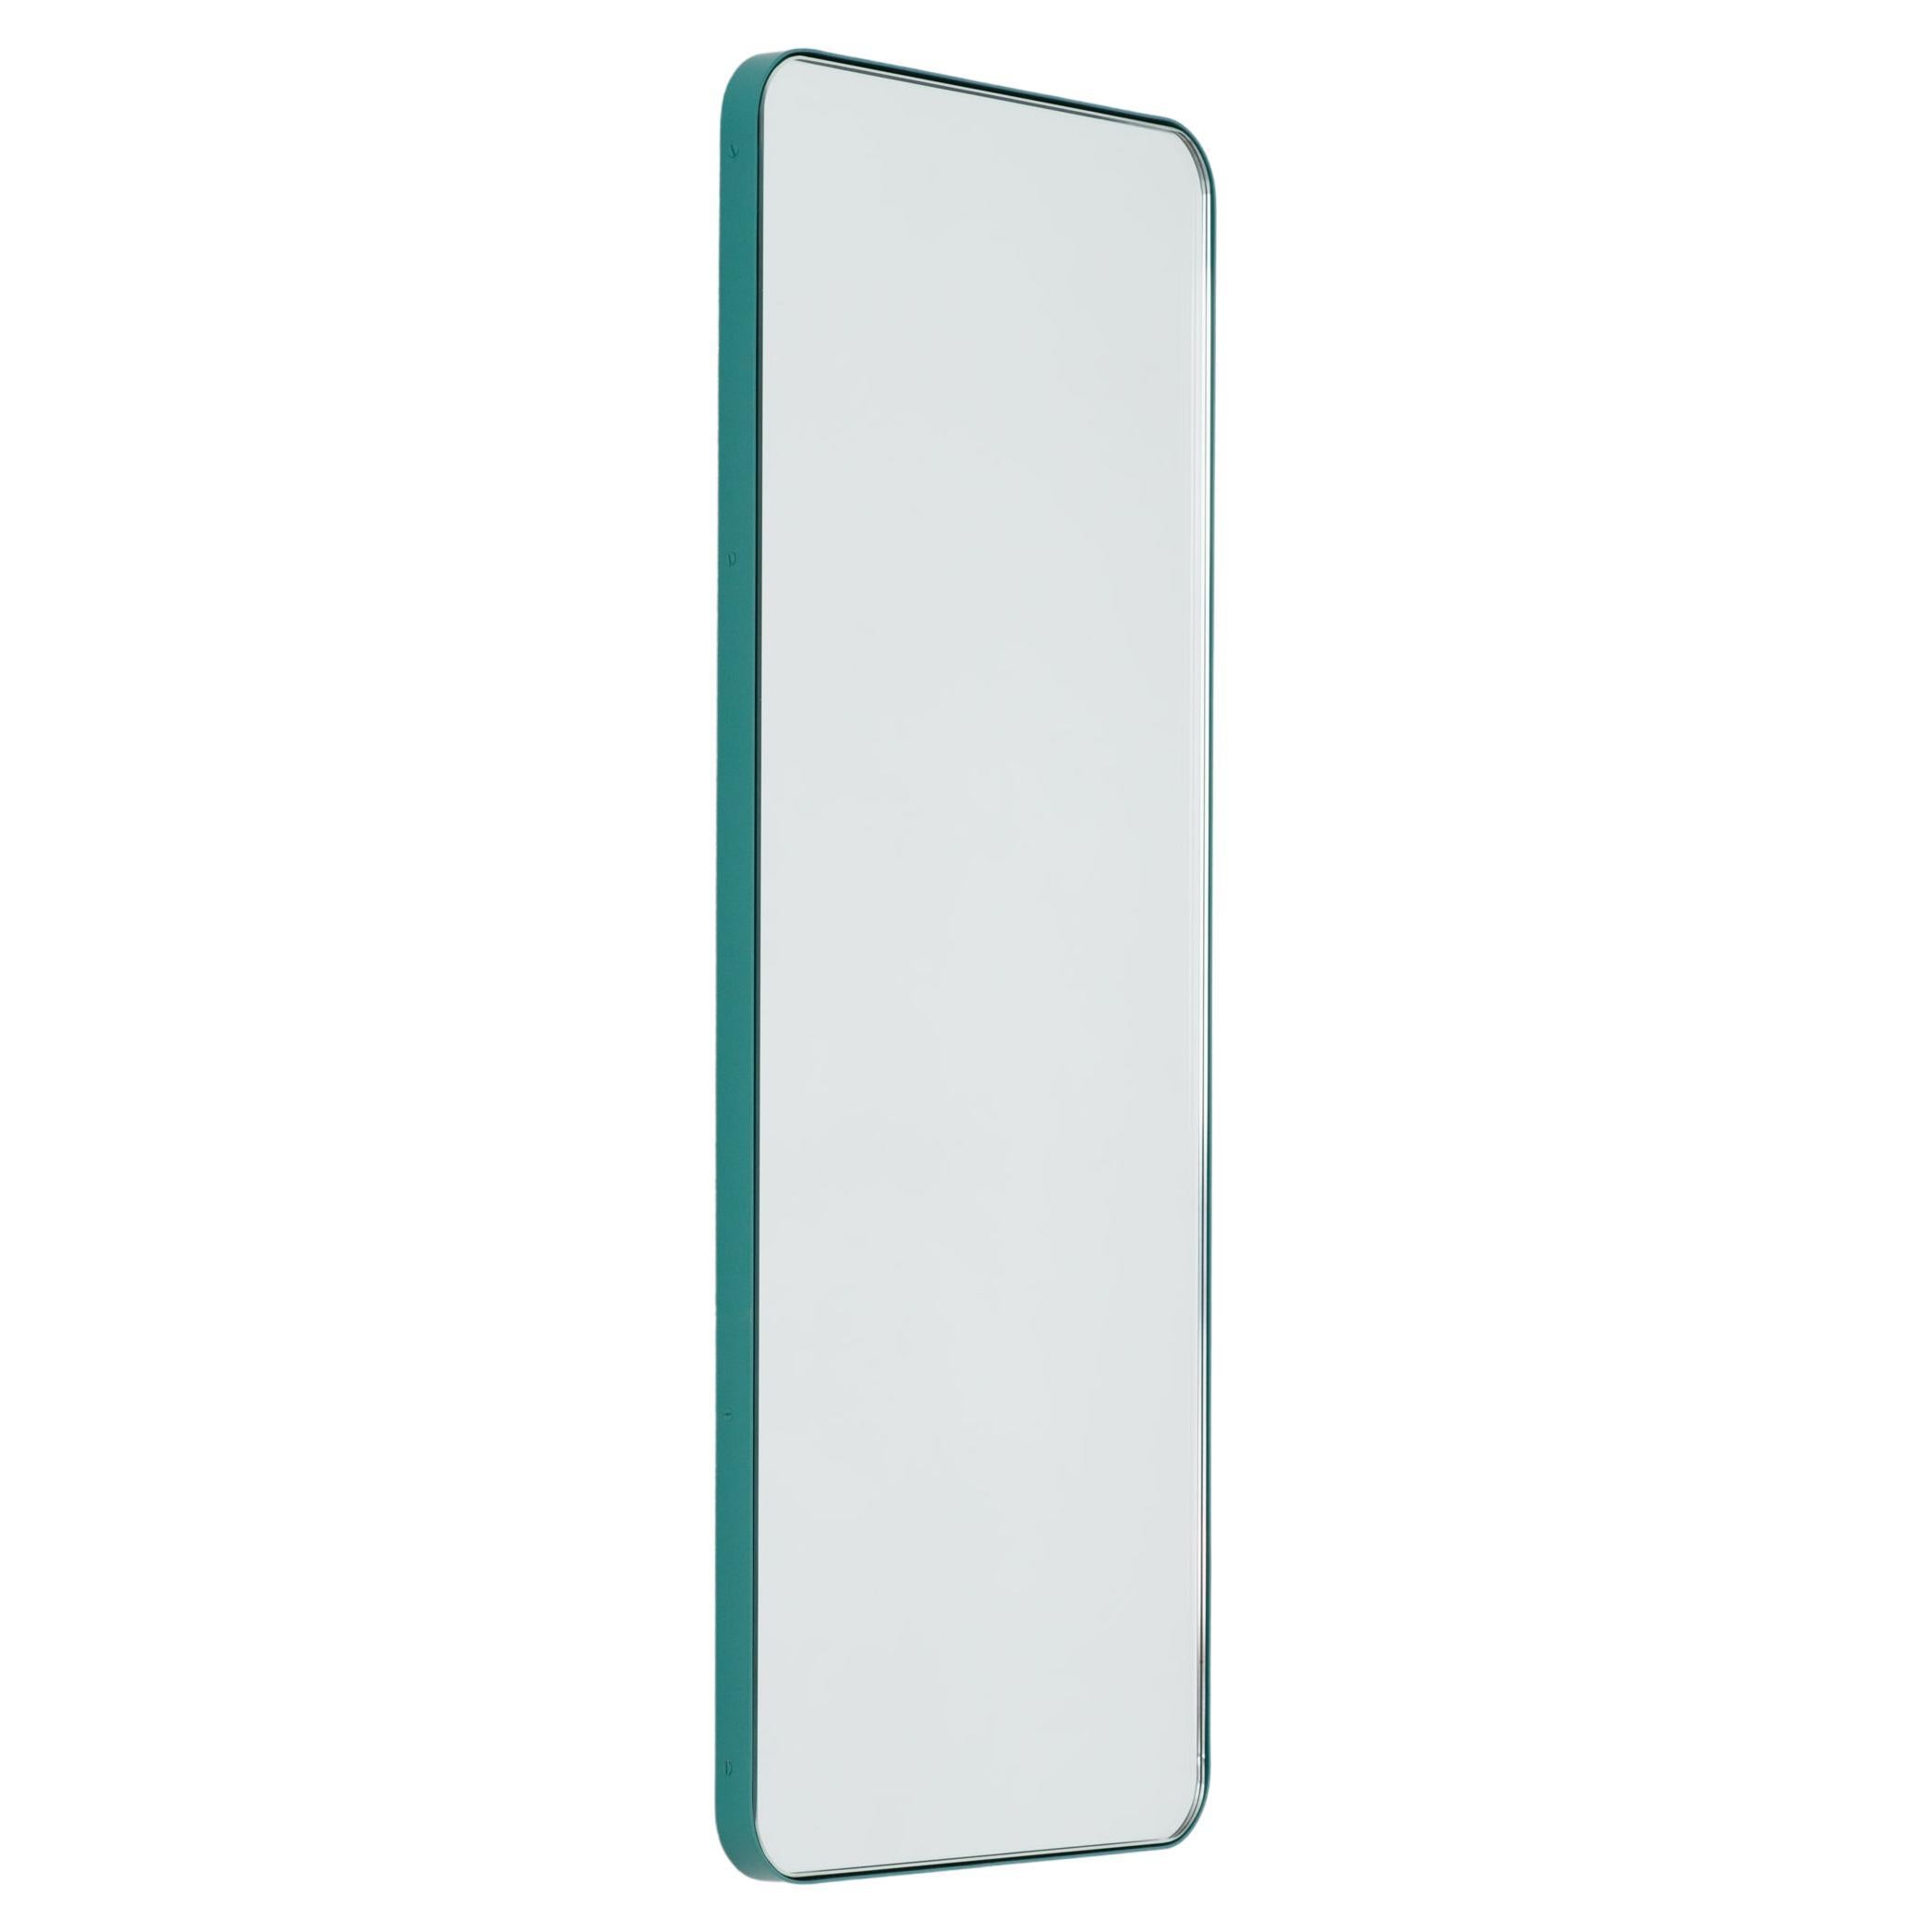 Quadris Rectangular Modern Mirror Mint Turquoise Frame, Large For Sale